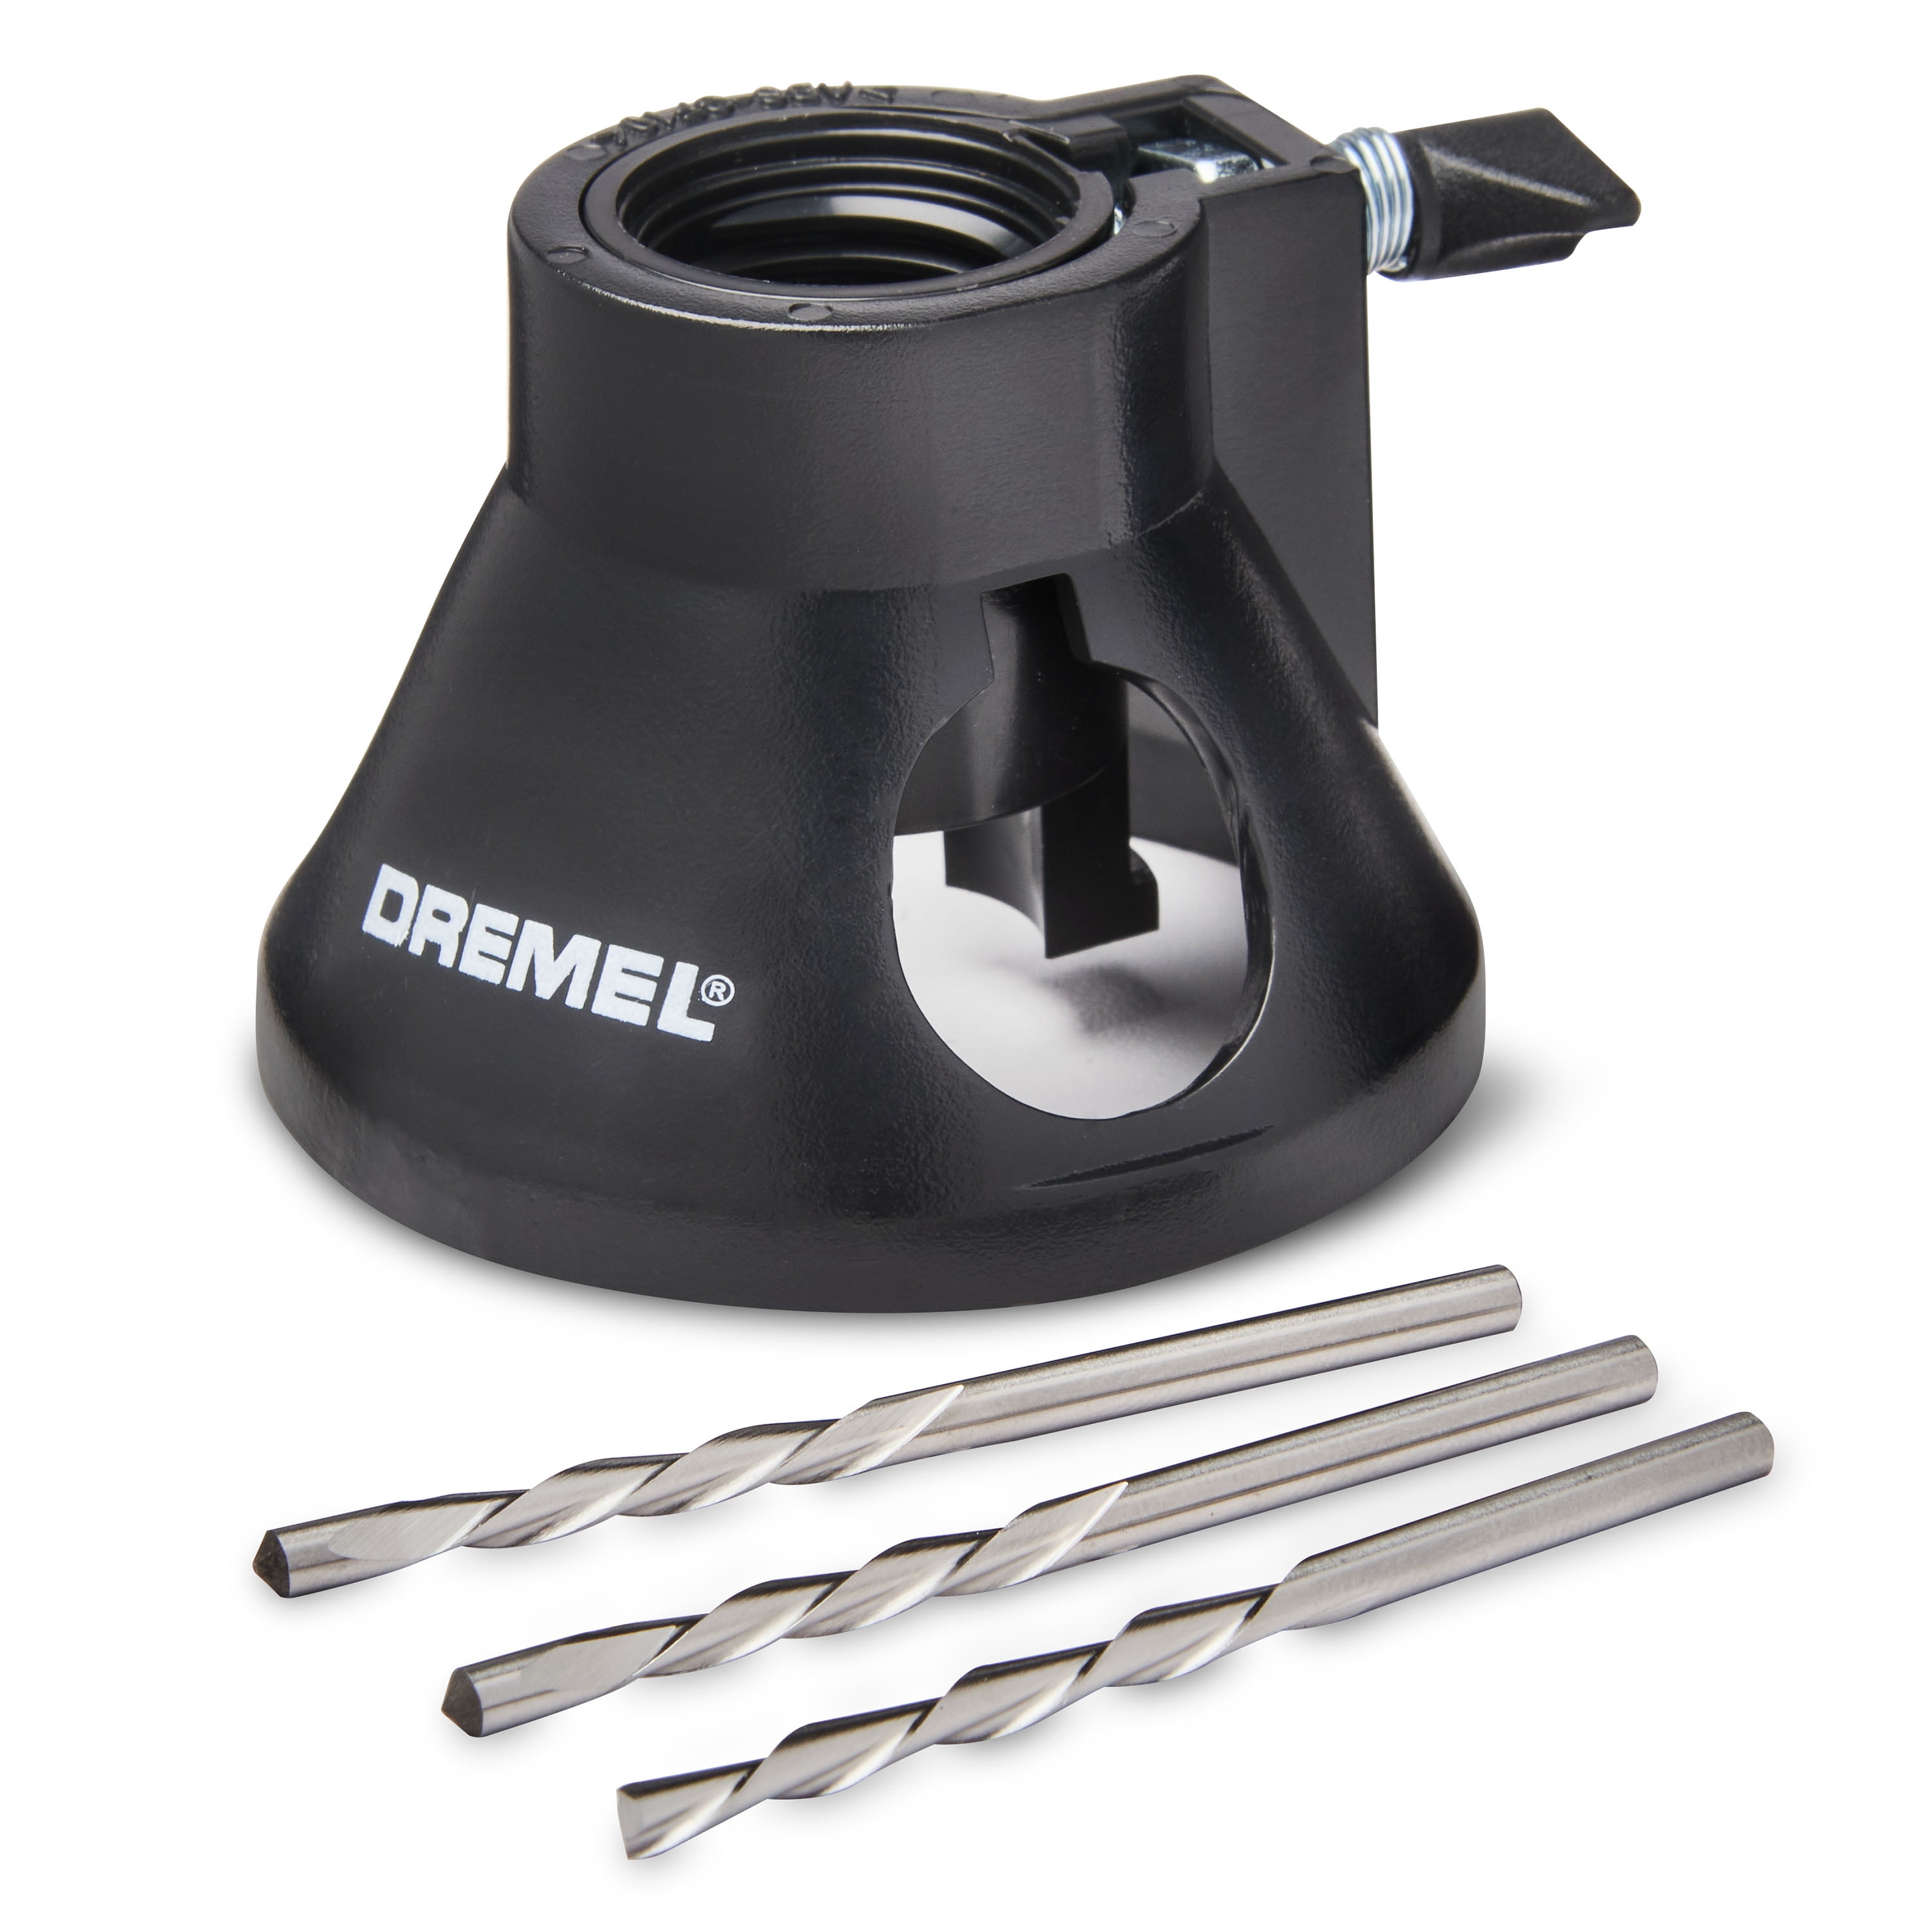 For Dremel Cut Guide thickness Multipurpose Mini Drill Tool Accessories 